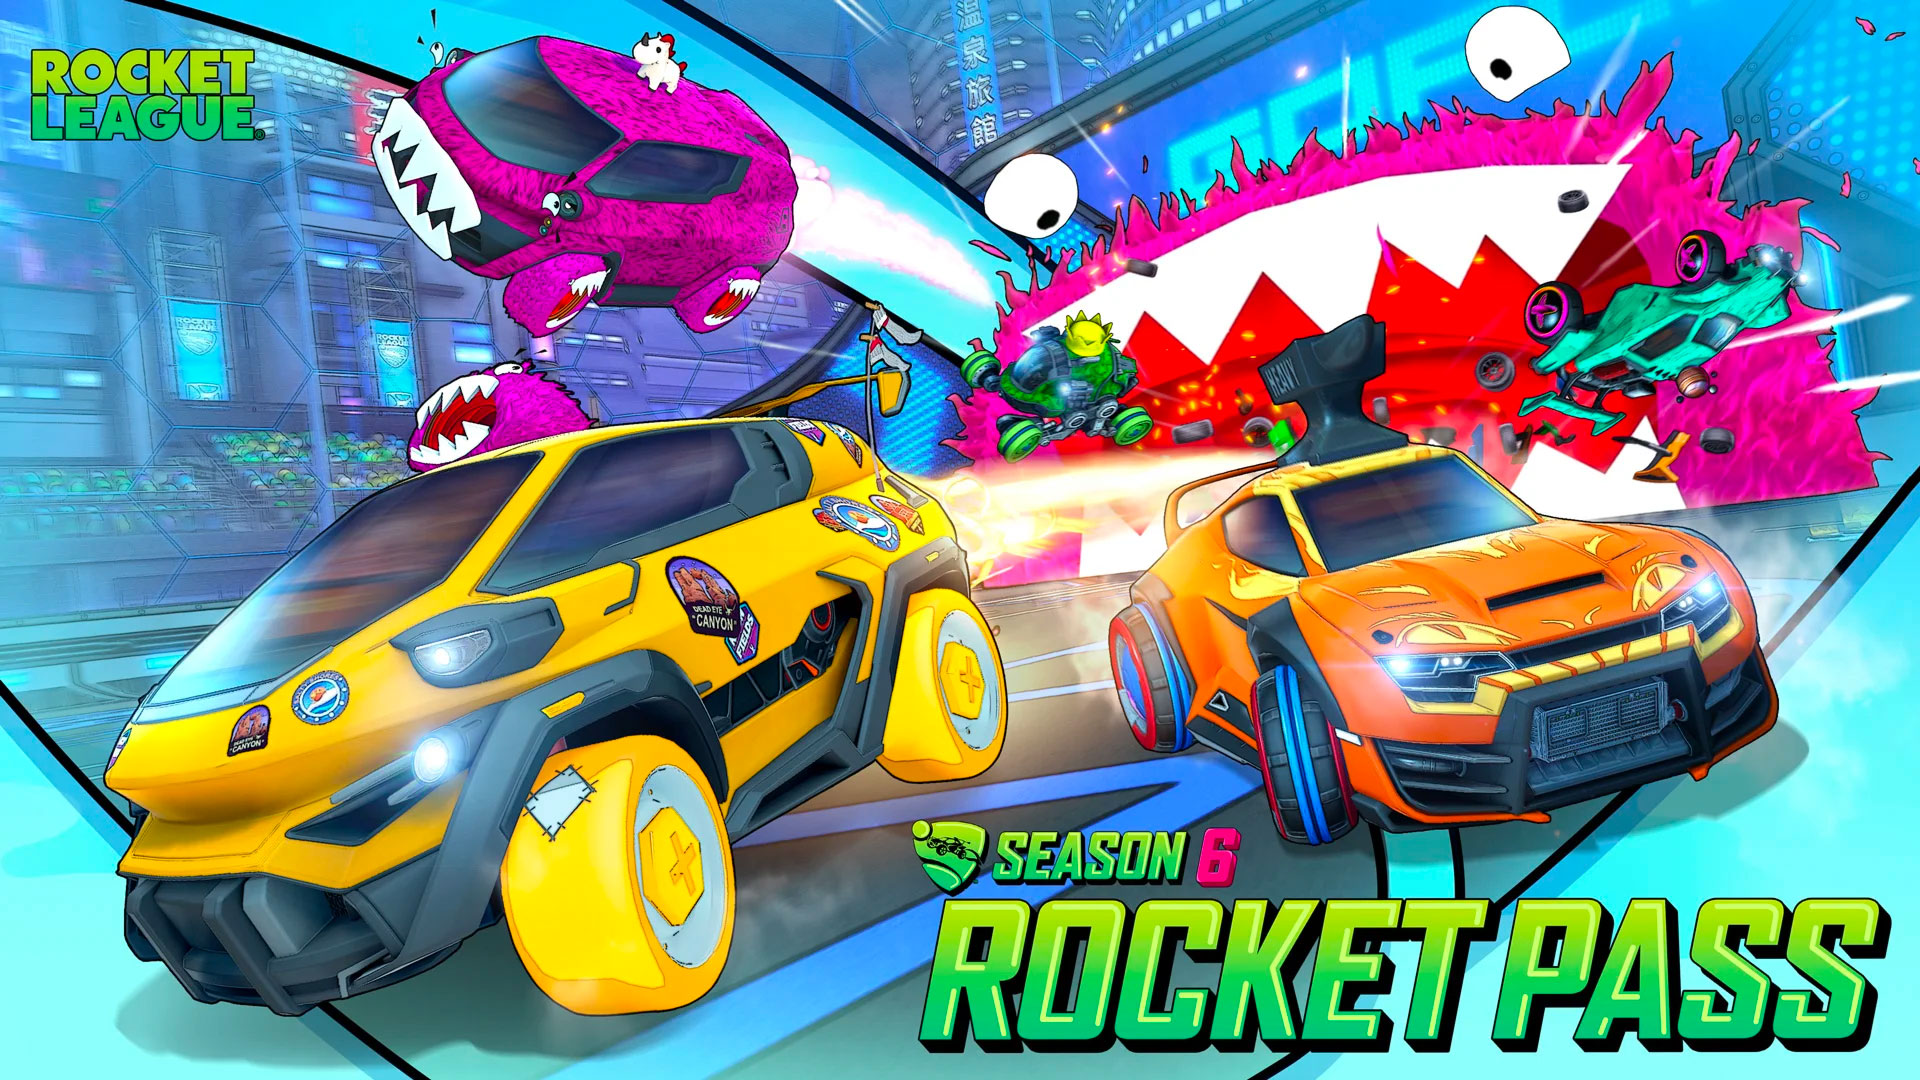 Illustration showing Rocket League Promo Artwork for Season 6 Rocket Pass